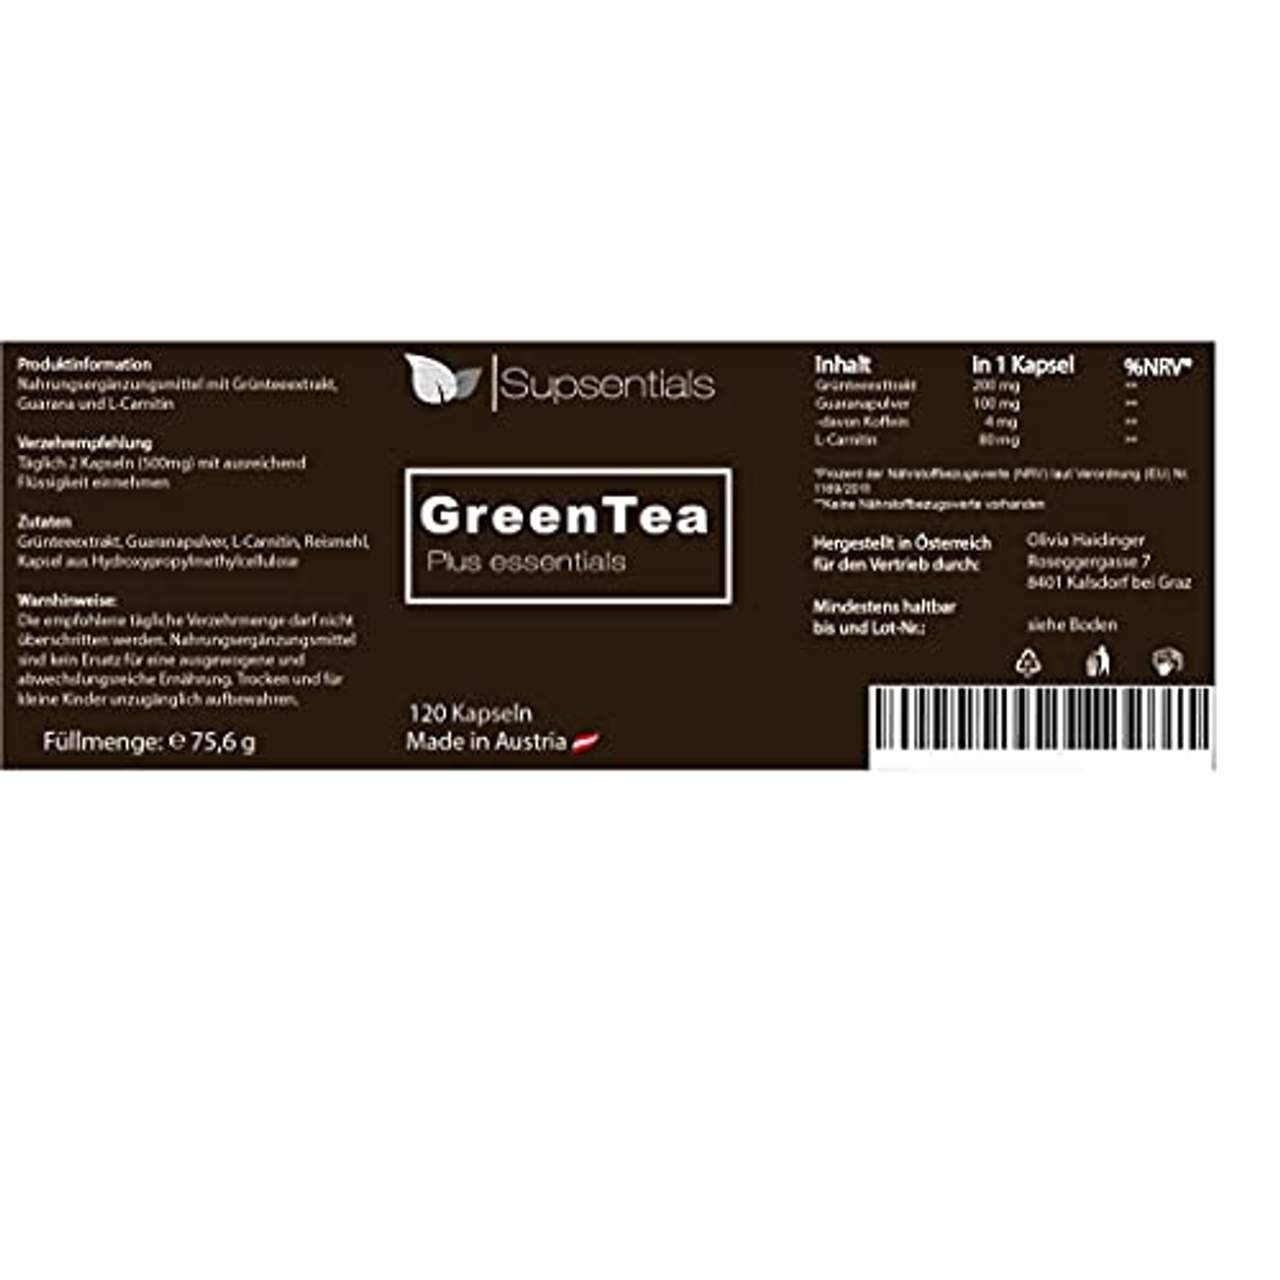 Supsentials Grüner Tee Extrakt